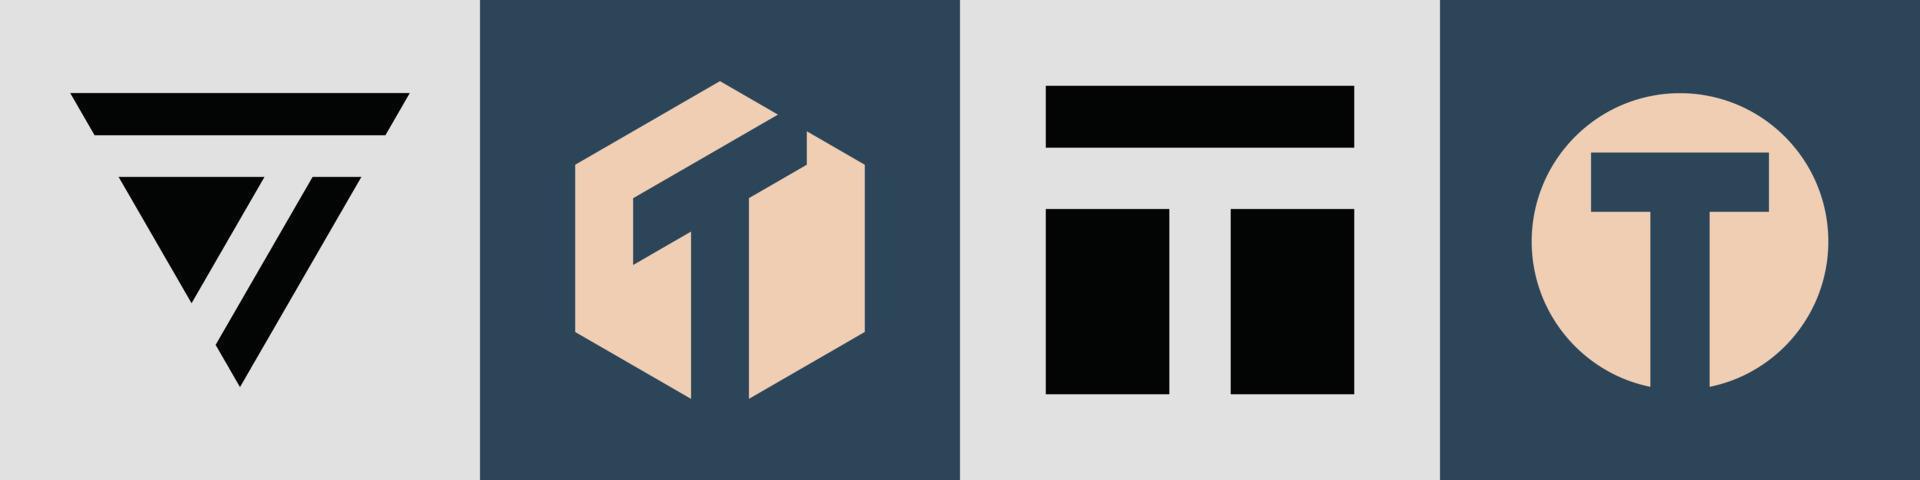 kreative einfache anfangsbuchstaben t-logo-designs paket. vektor